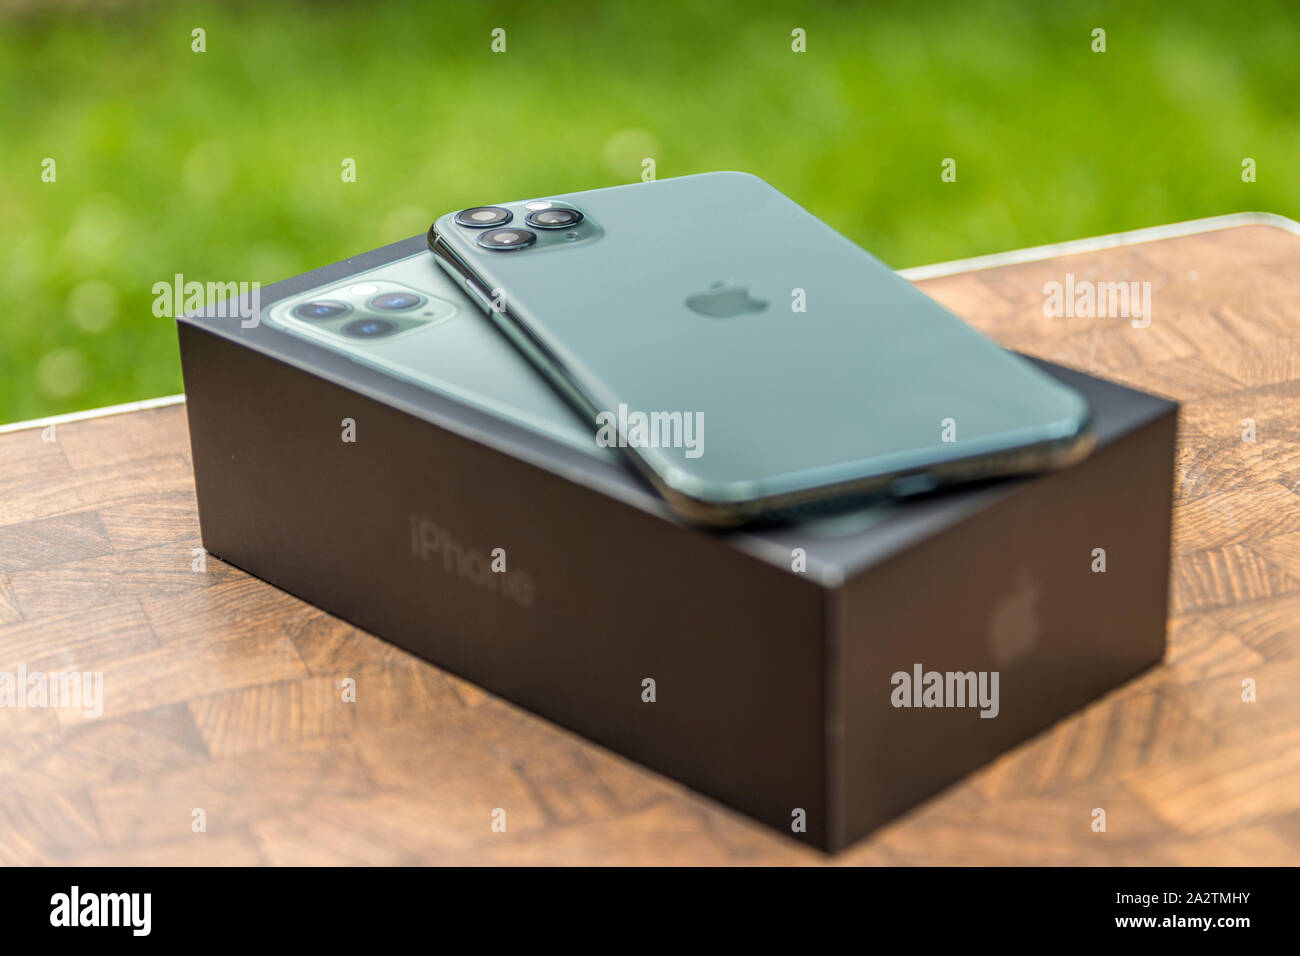 iPhone 11 Pro MAX Midnight Green laying on its box. Portland, Oregon / USA - October 2019. Stock Photo